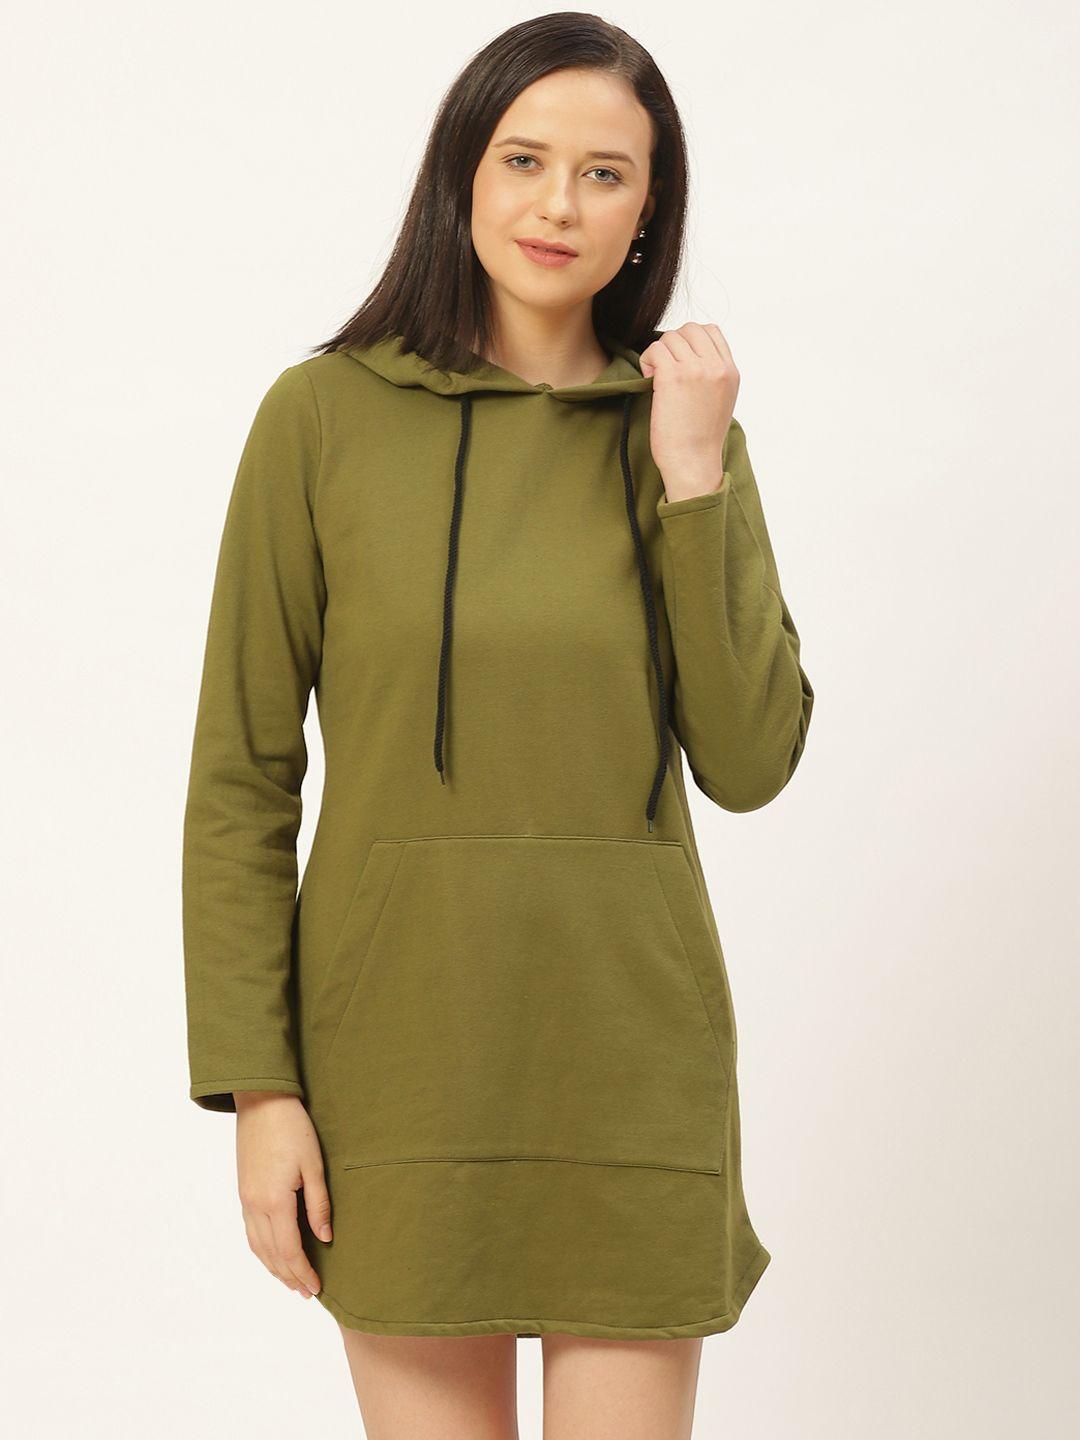 rigo women olive green solid sweatshirt hooded dress